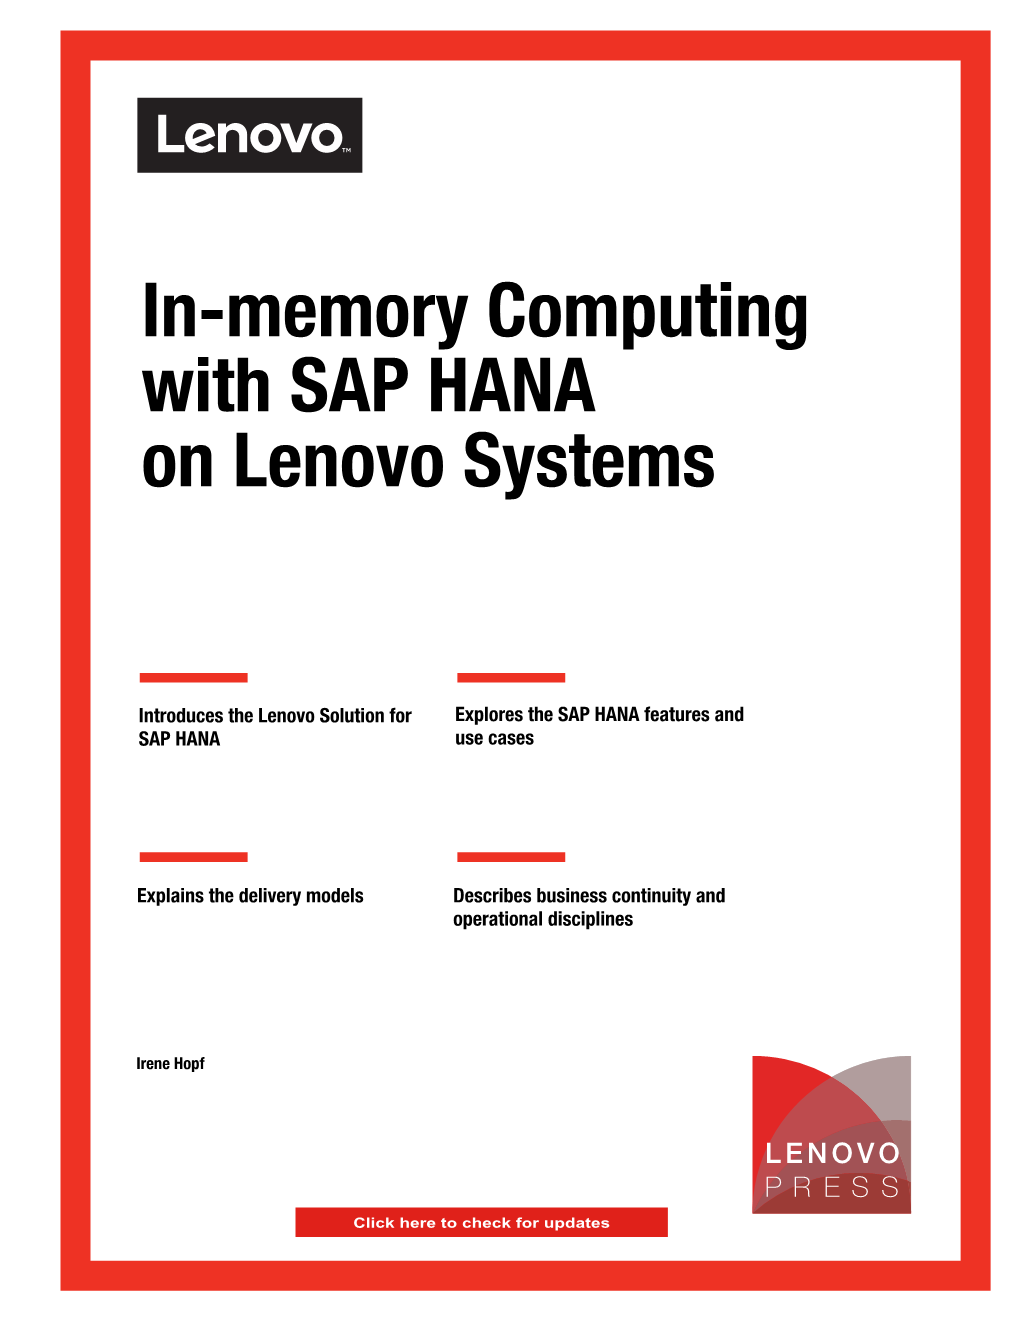 In-Memory Computing with SAP HANA on Lenovo Systems